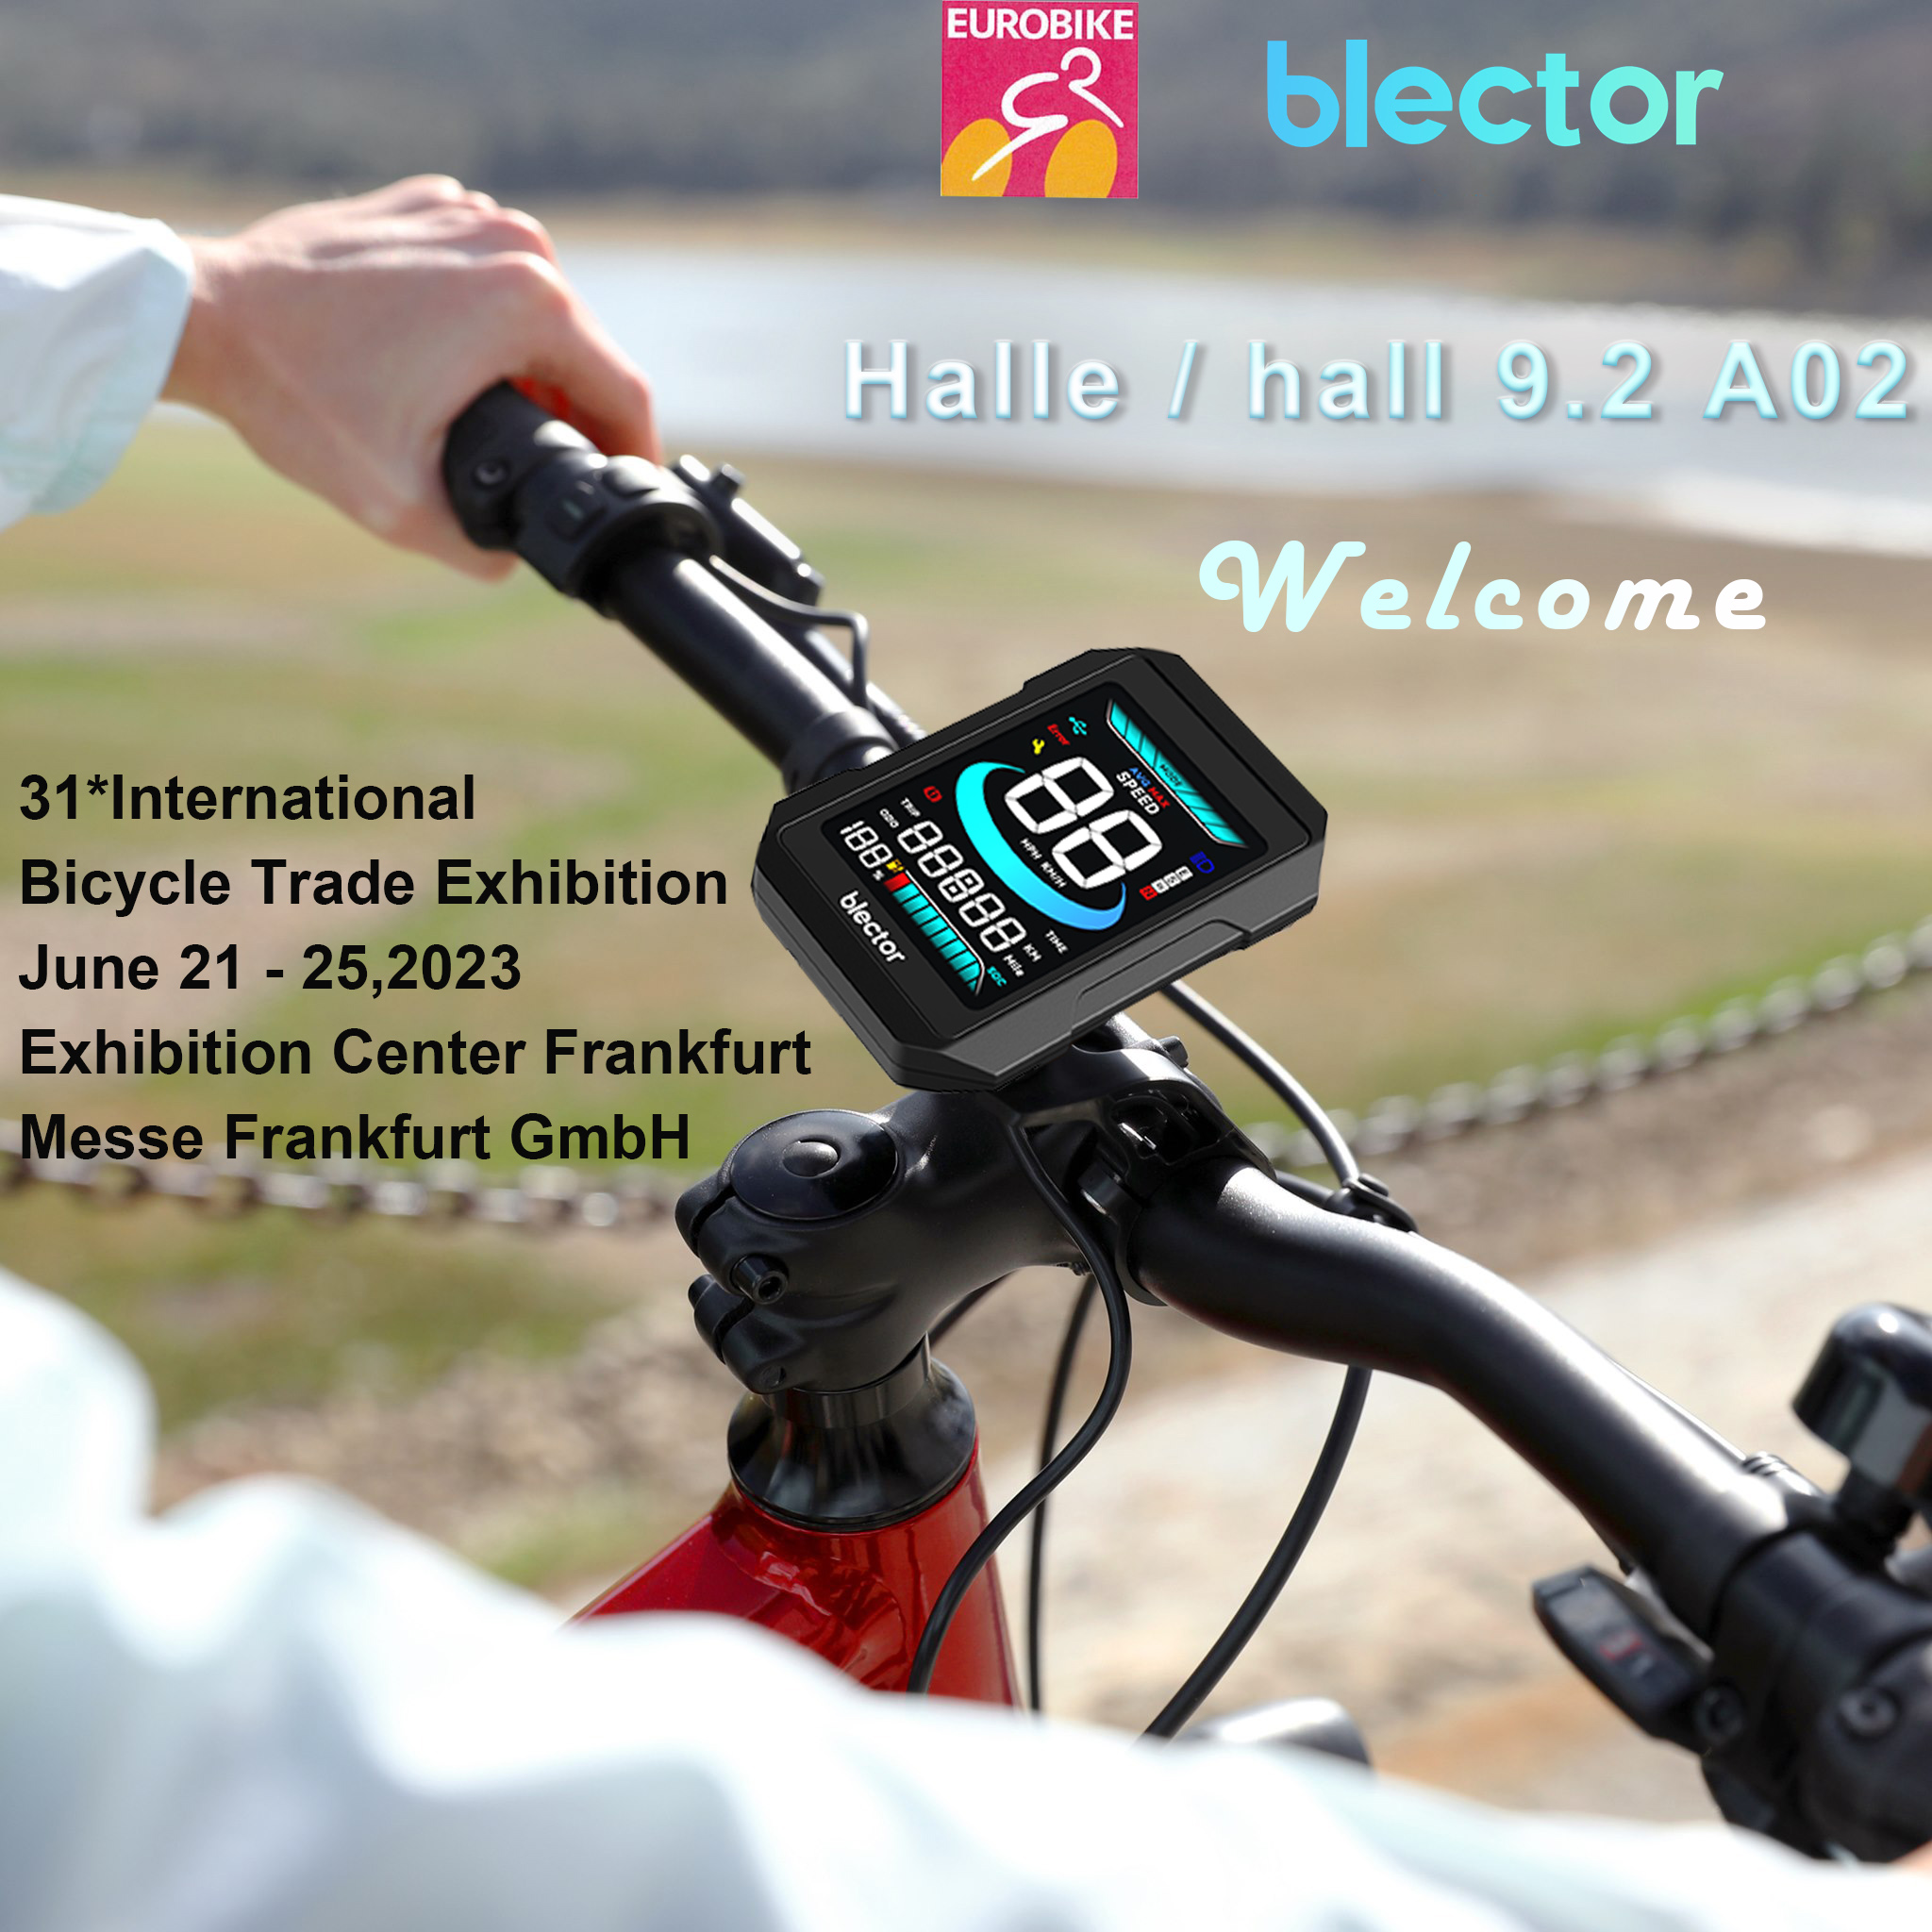 Blector Eurobike exhibition 